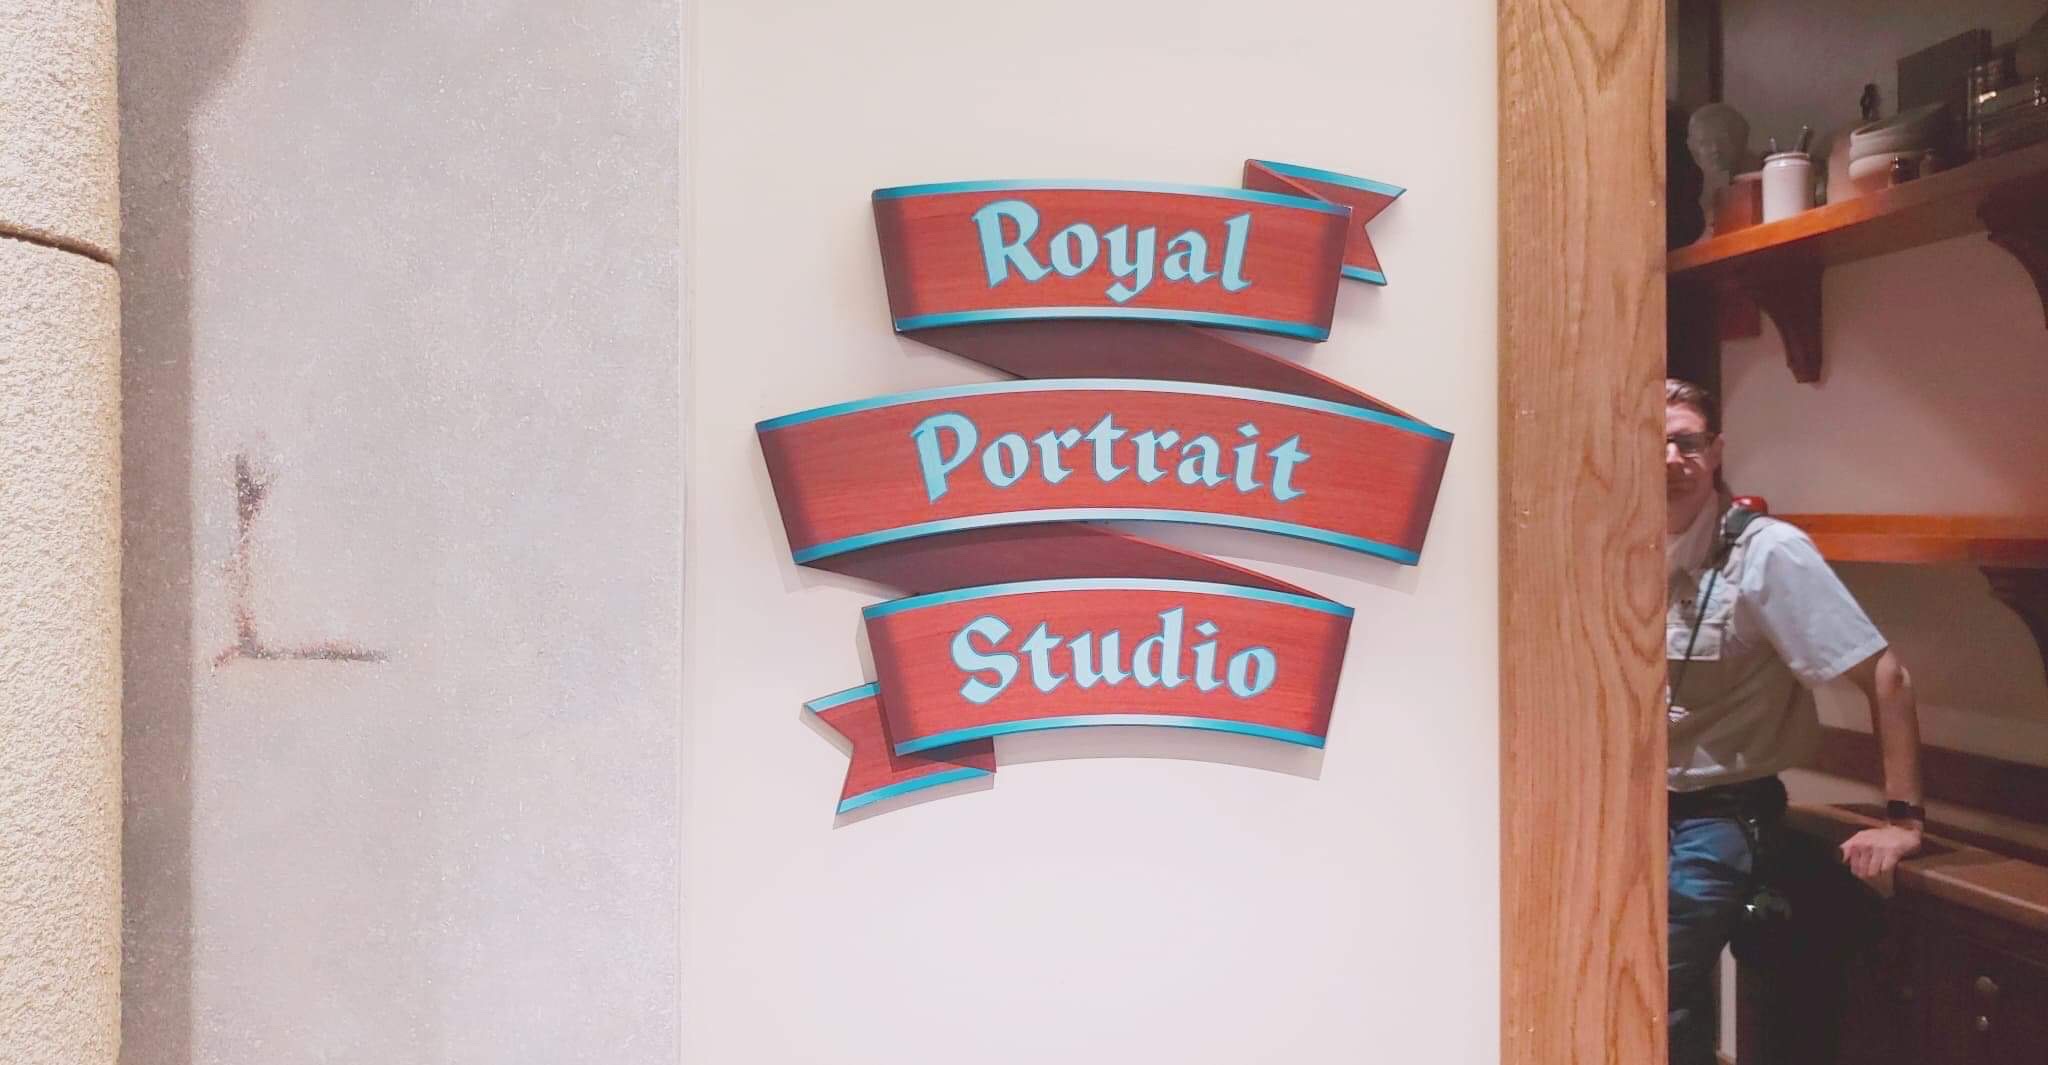 New PhotoPass Studio Now Open At Magic Kingdom